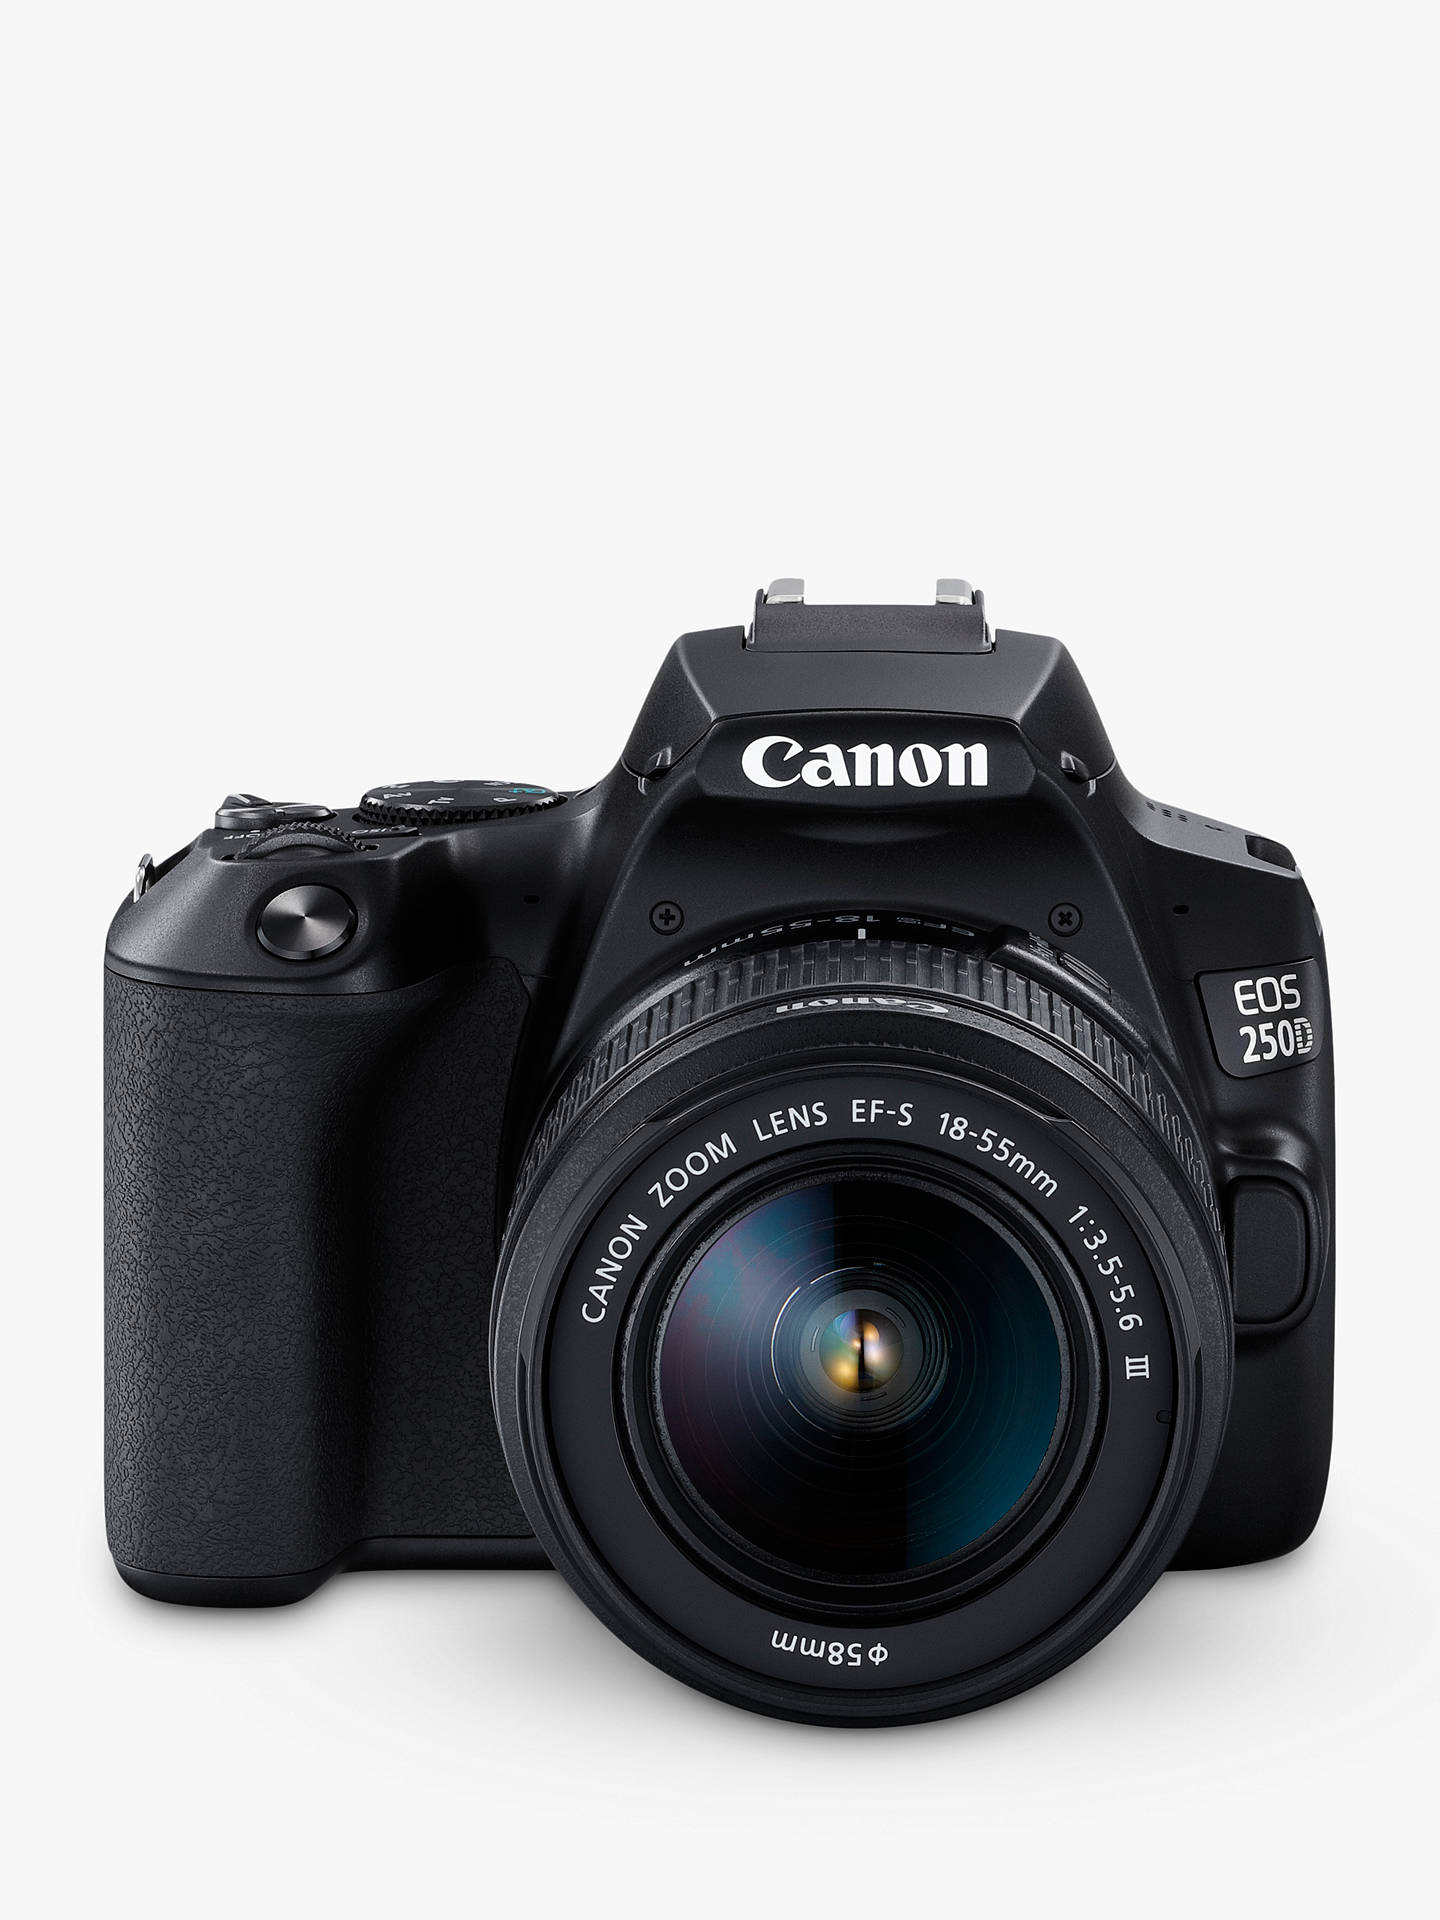 Best cameras 2019 canon eos 250d